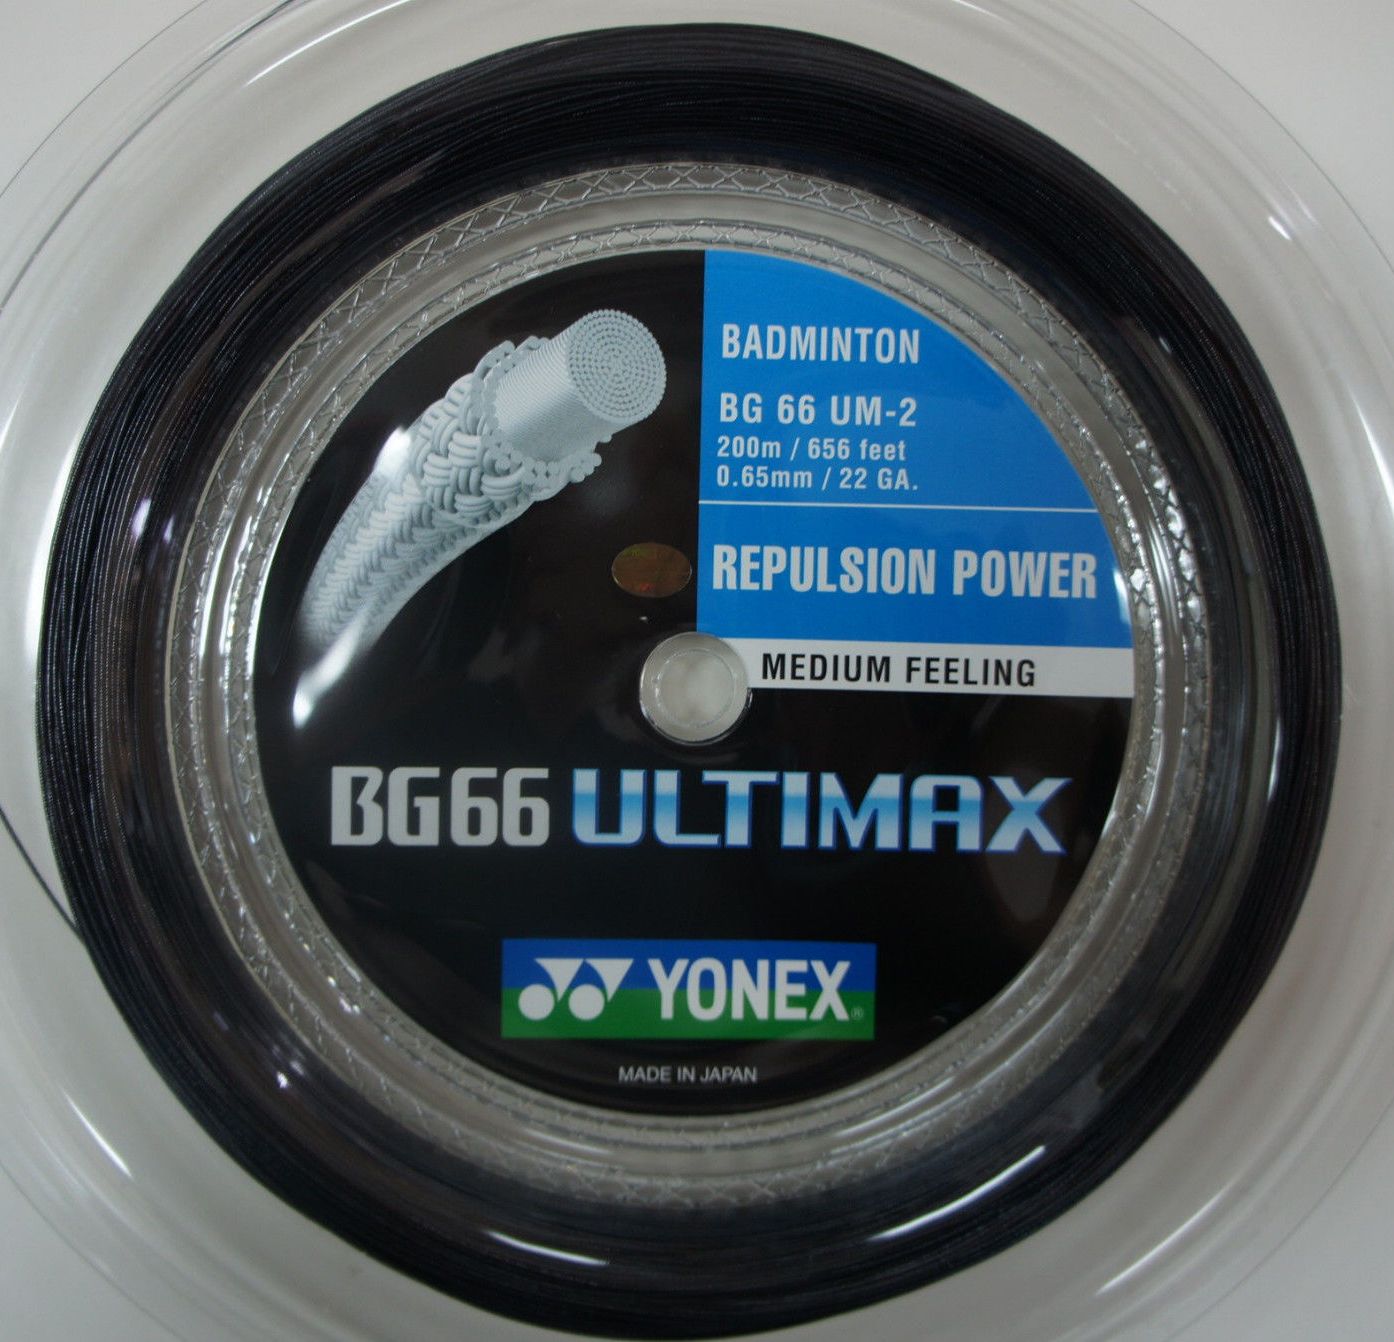 YONEX BG66 Ultimax Badminton Coil String - 200m - BG66UM - Black